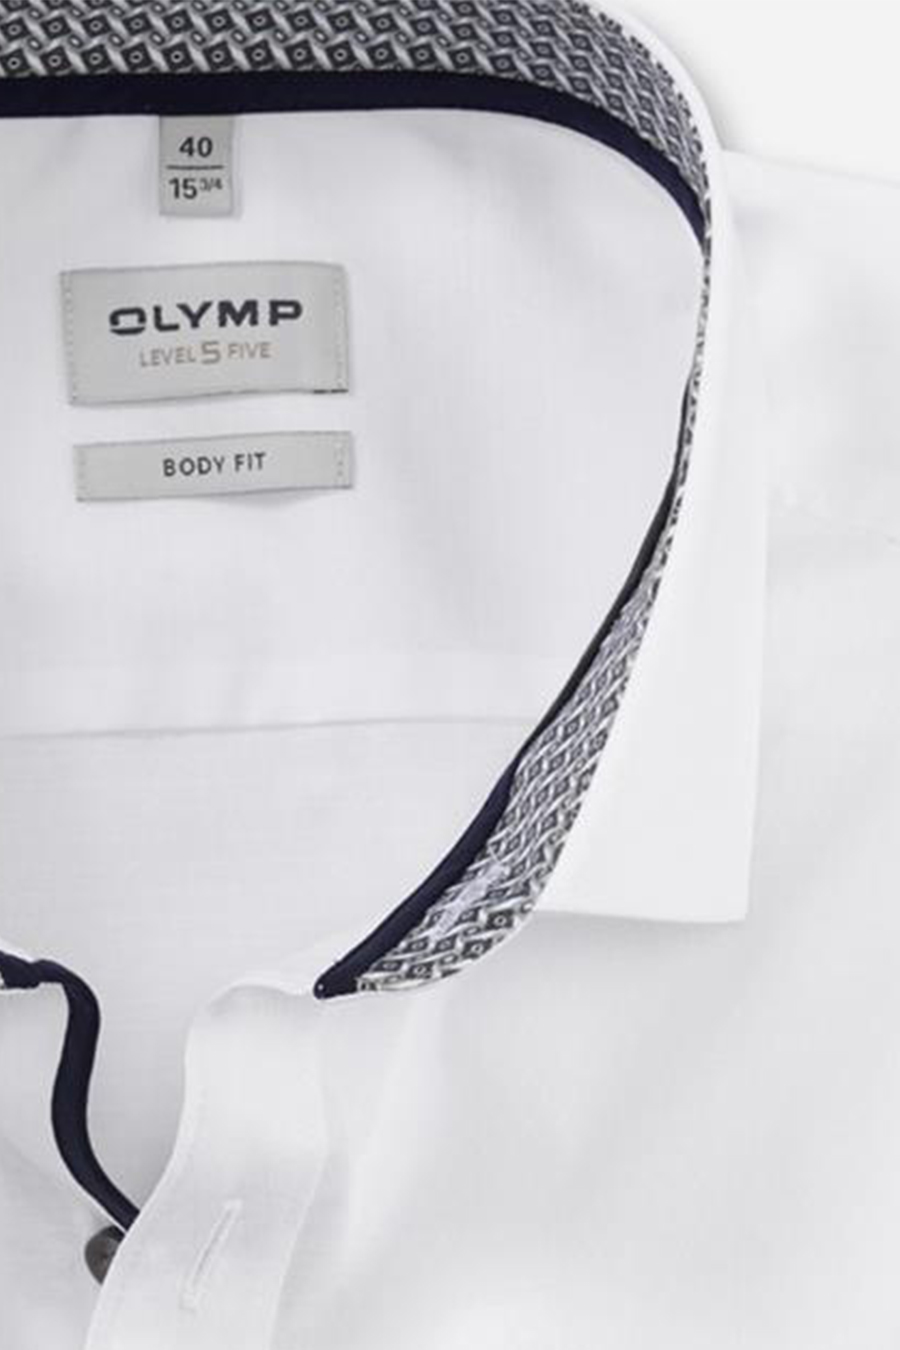 OLYMP Level Five fit Kent New body Kragen Langarm Hemd weiß Muster